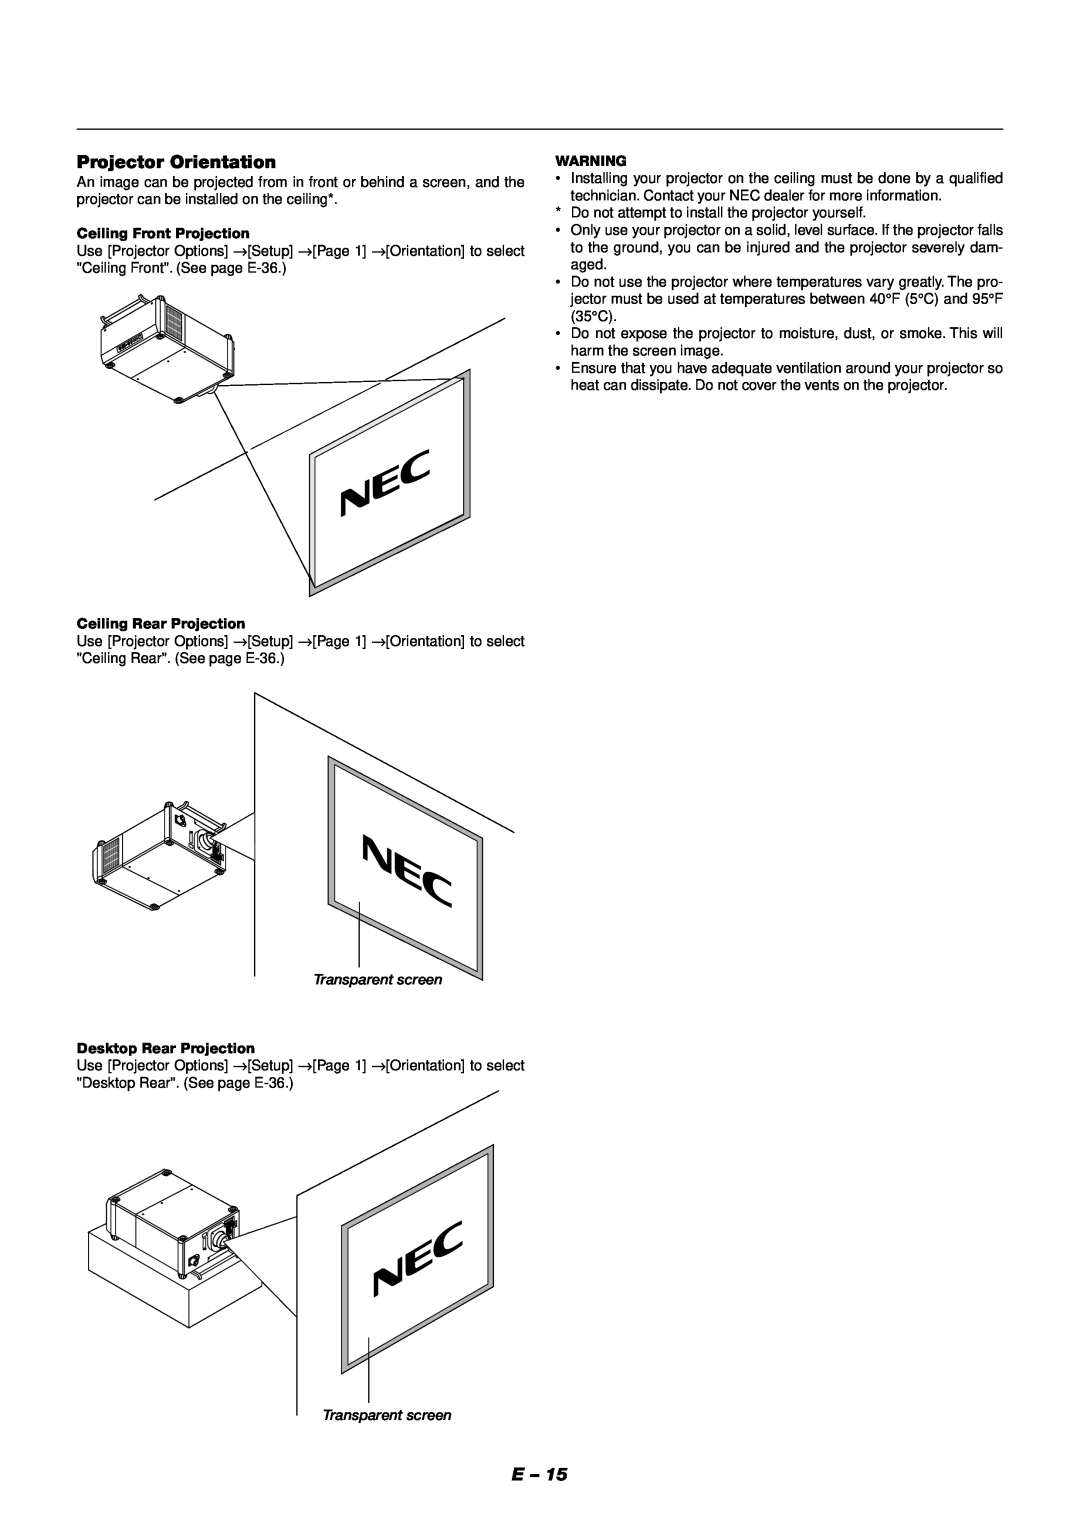 NEC XT9000 user manual Projector Orientation, Ceiling Front Projection, Ceiling Rear Projection, Desktop Rear Projection 